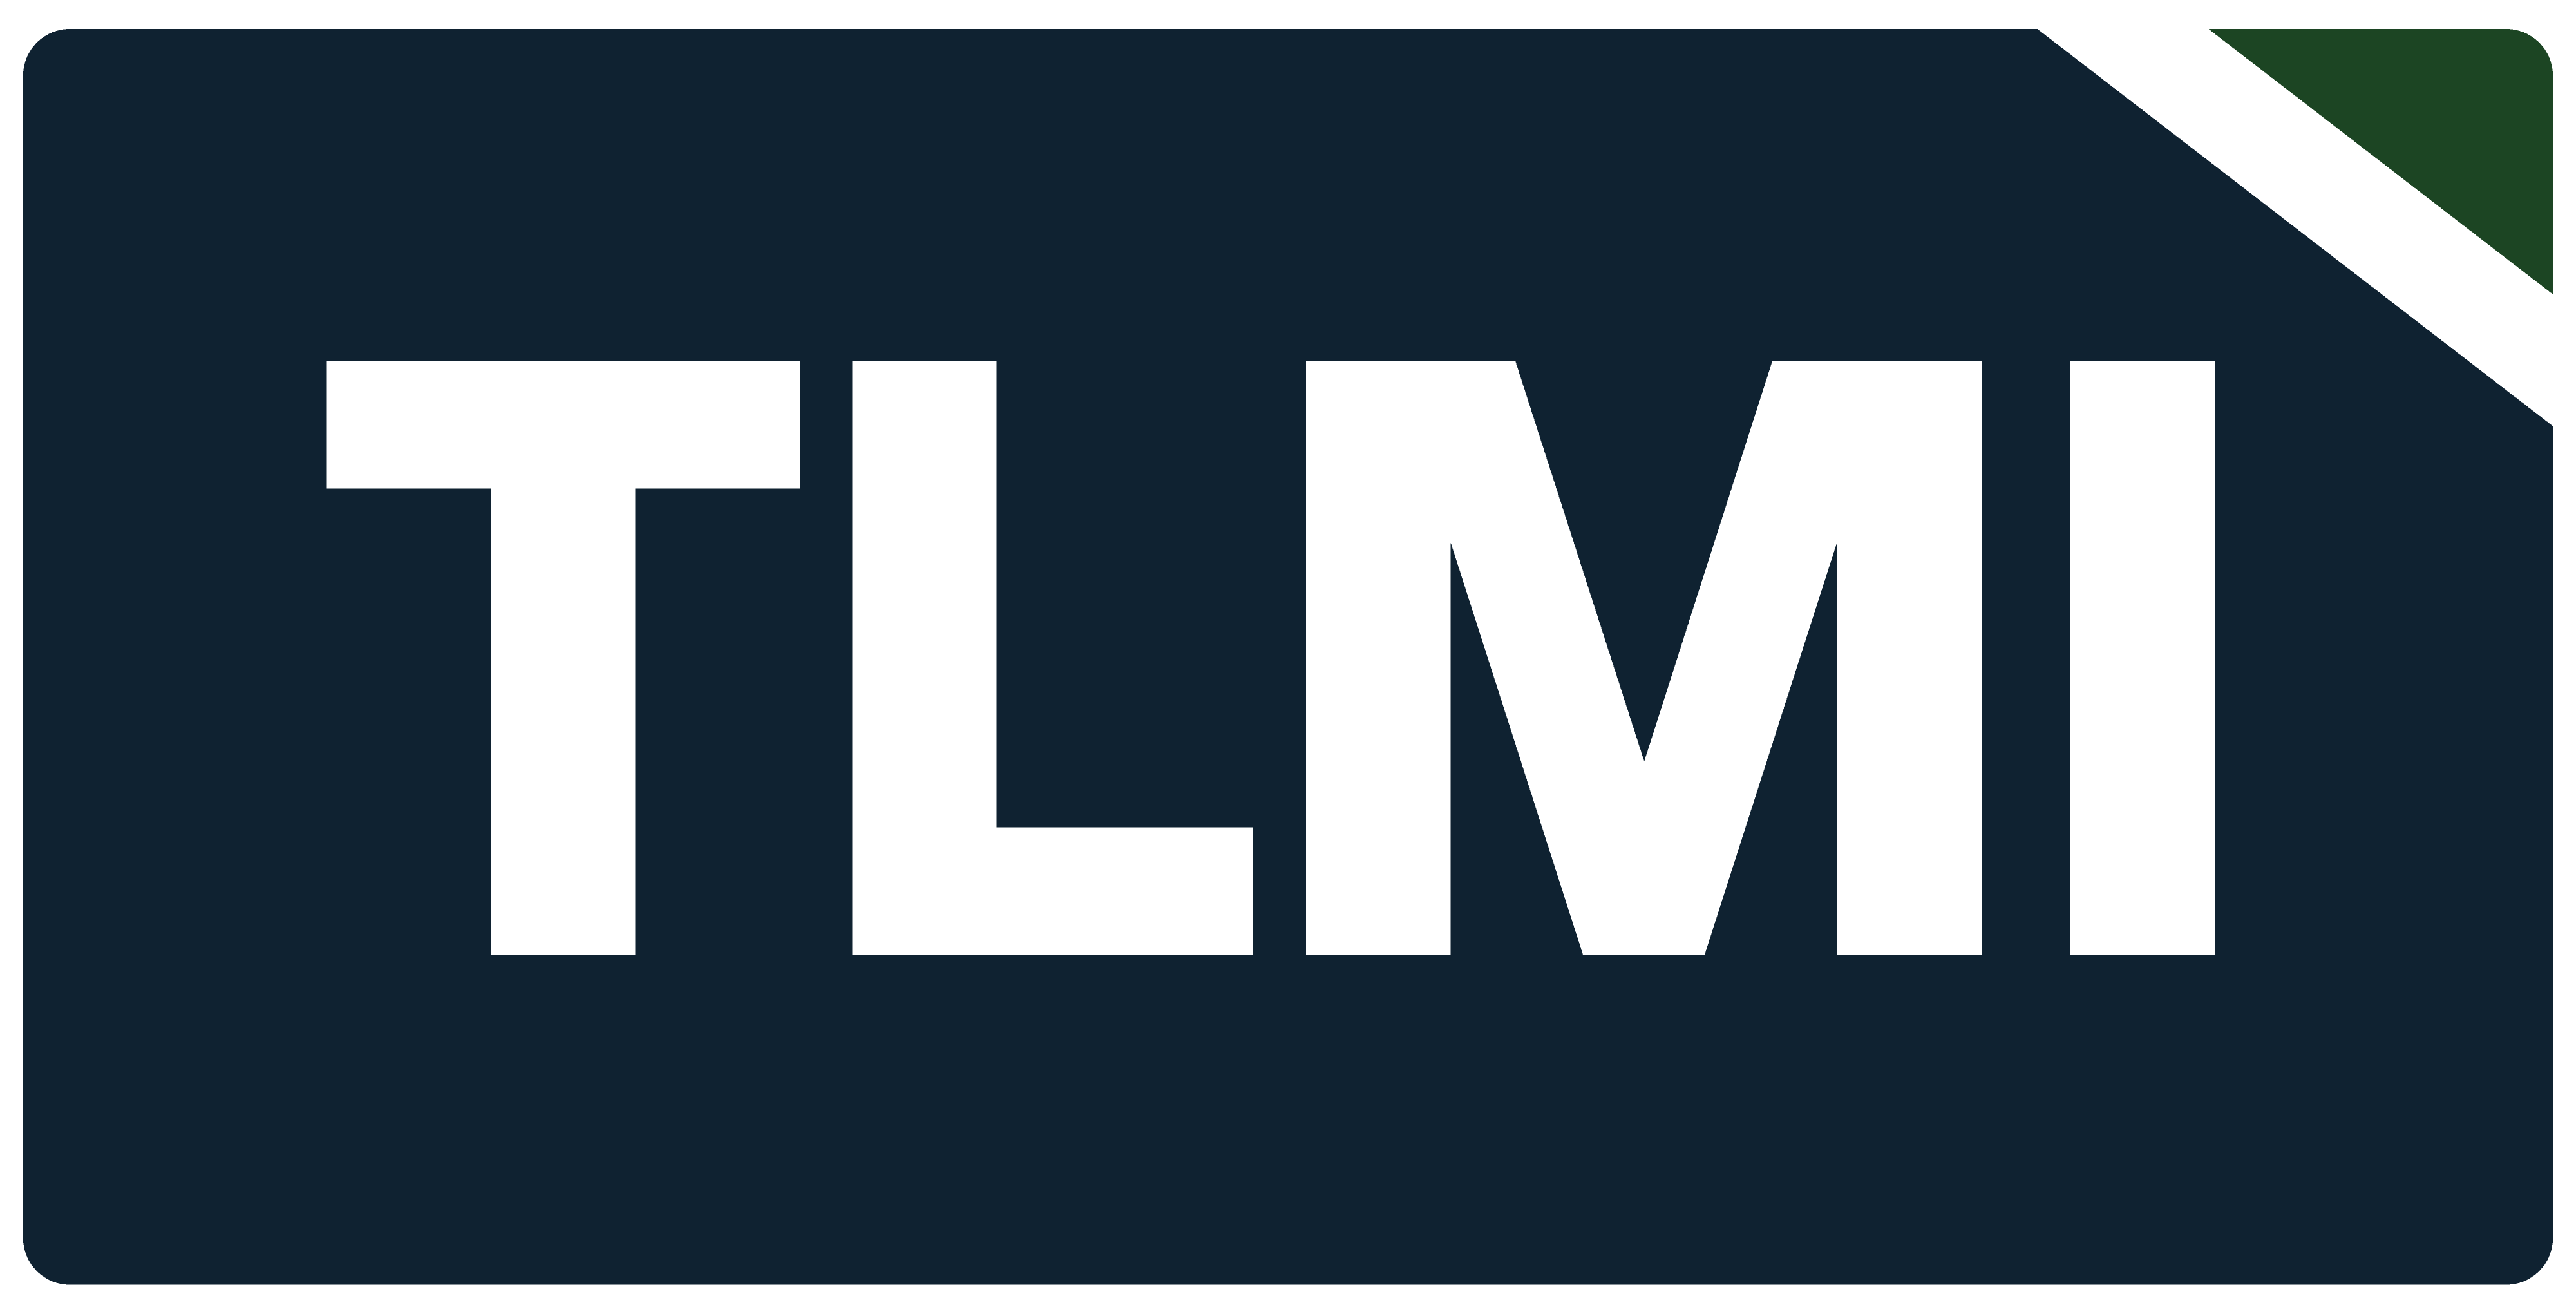 TLMI announces monthly virtual events